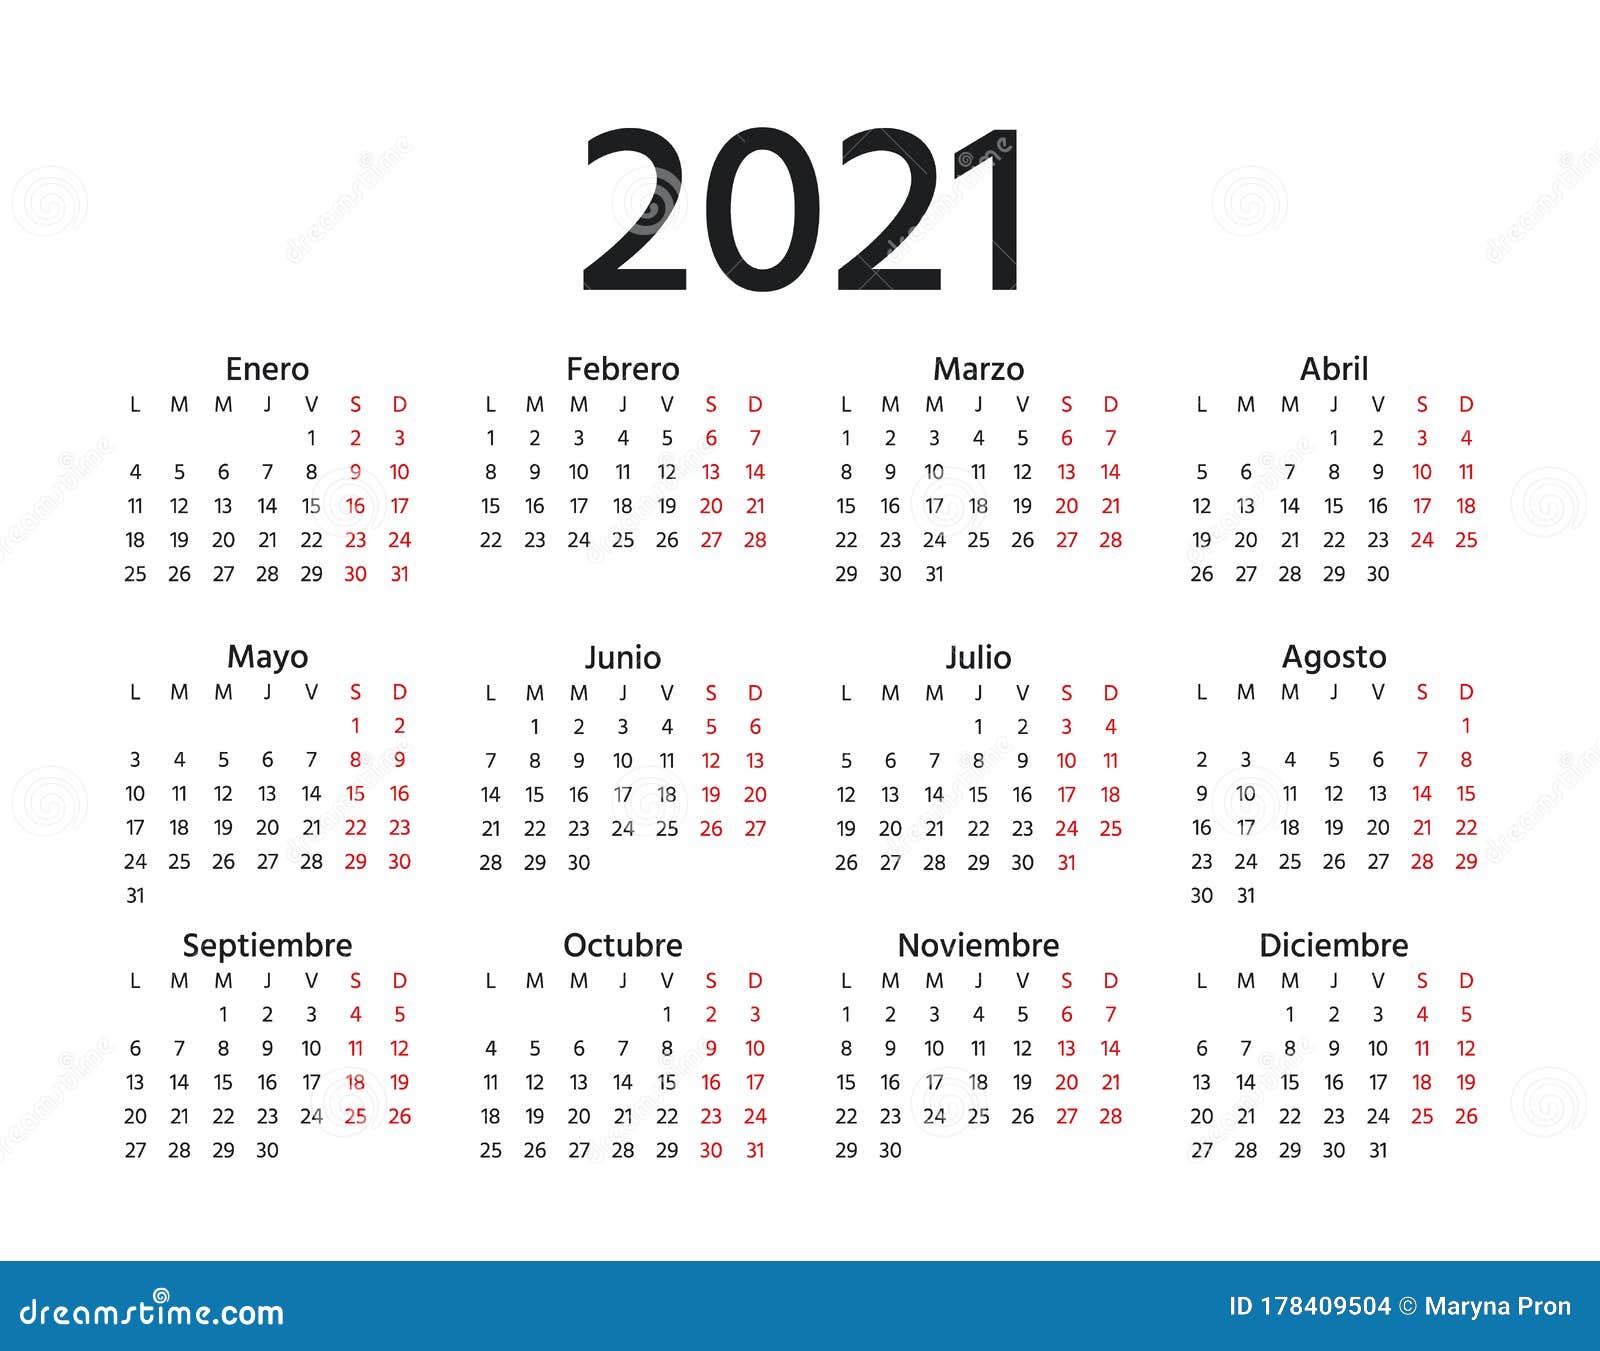 2021 spanish calendar free 2021 Spanish Calendar Vector Illustration Template Year Planner Stock Vector Illustration Of Graphic December 178409504 2021 spanish calendar free